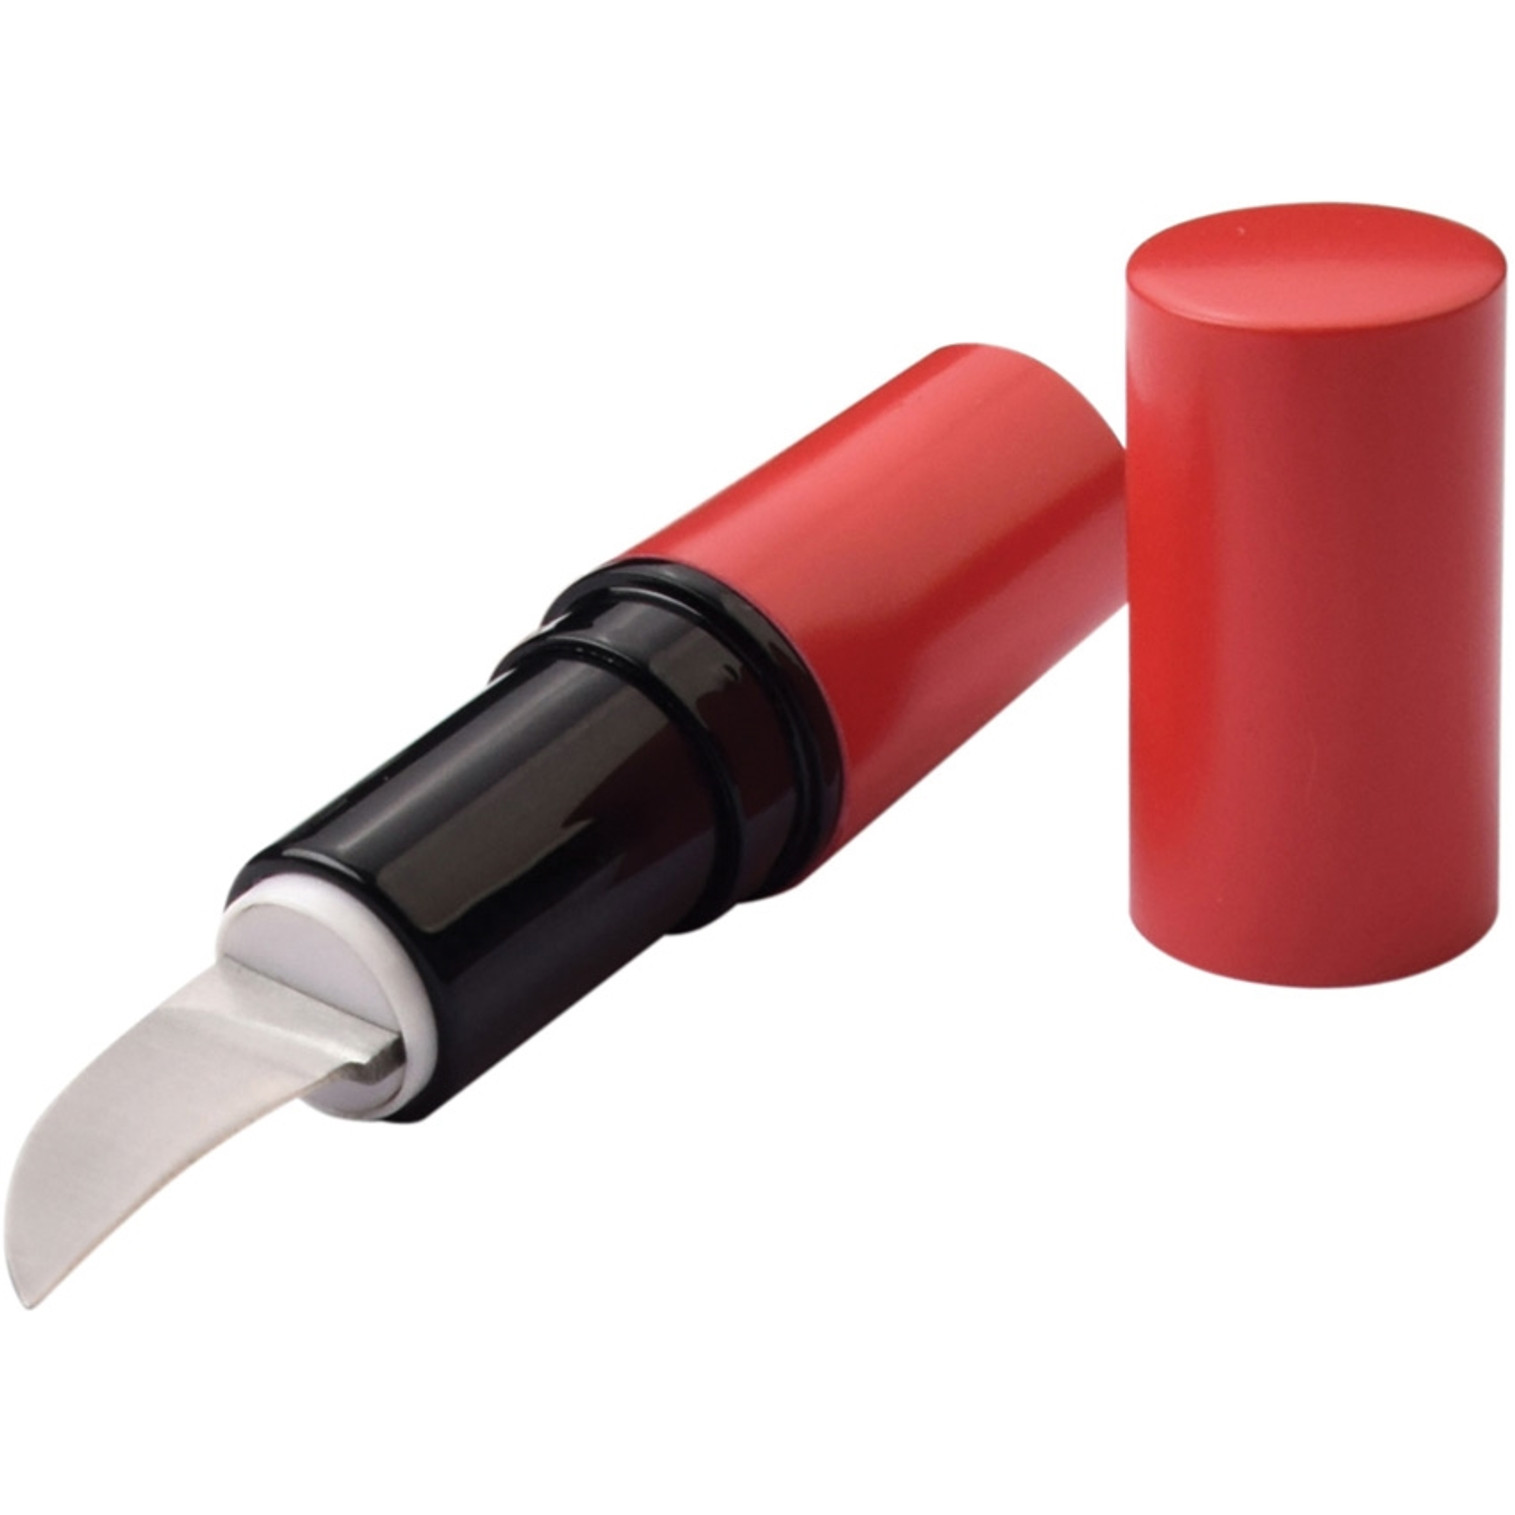 Lipstick Knife Red/Black